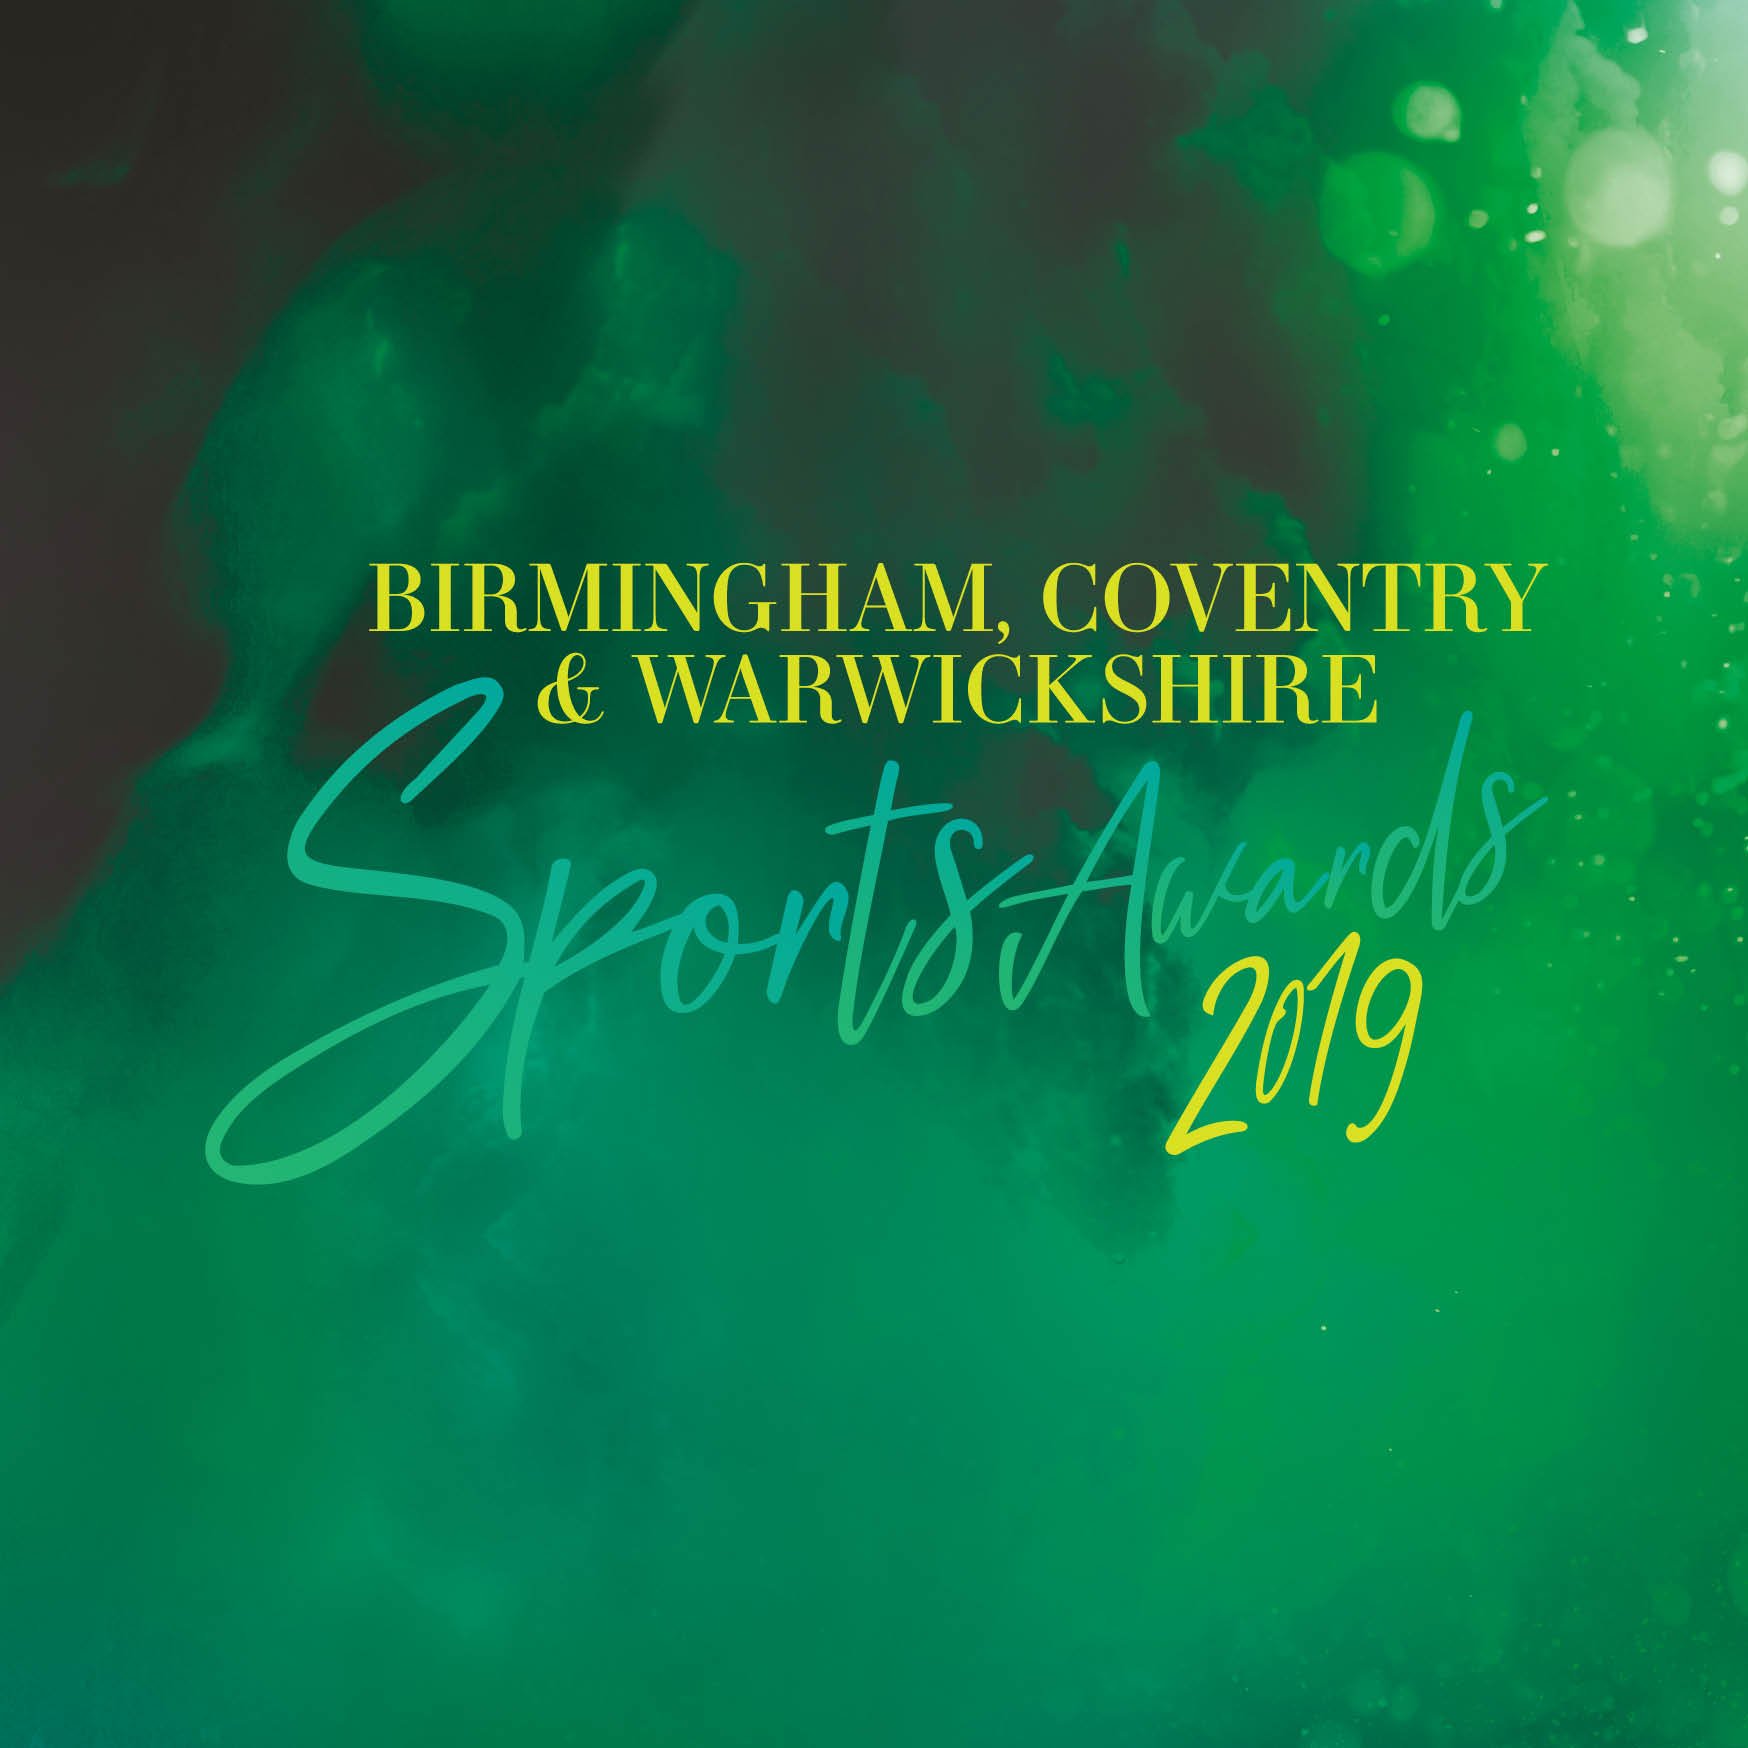 Birmingham, Coventry & Warwickshire Sports Awards 2019, in association with @ChampionsUKplc. Thursday 24th October 2019 at Edgbaston Stadium.